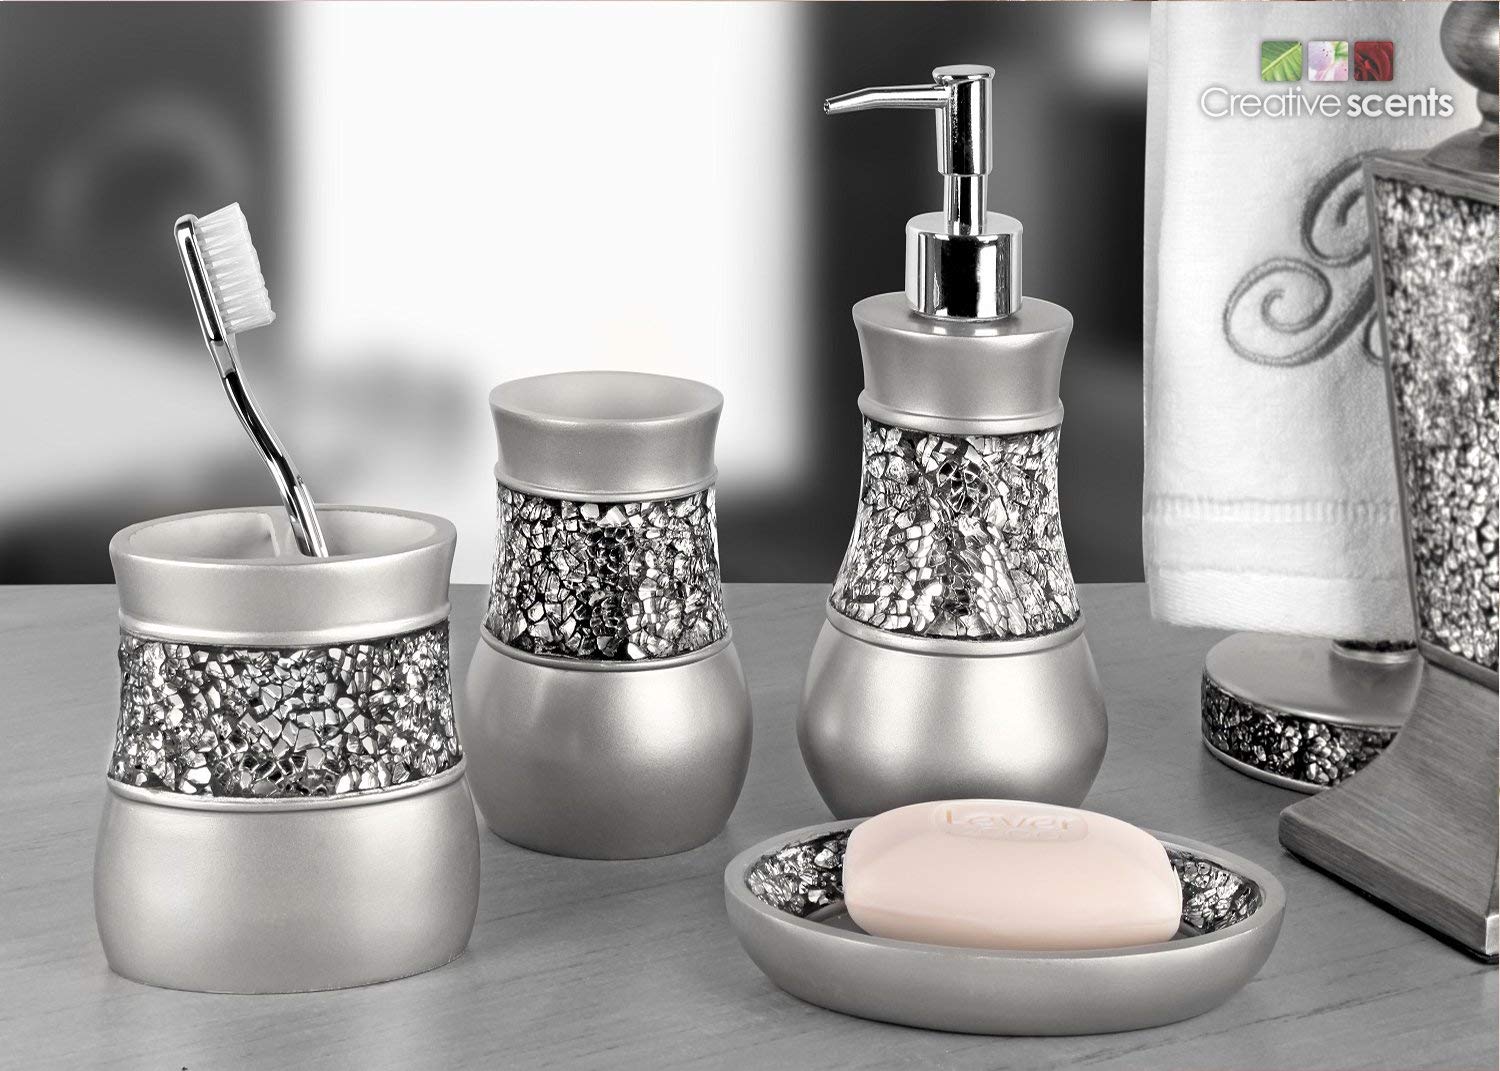 amazon.com: Creative fragrances bathroom accessories set, 4-piece bathroom ensemble, bathtub AKPTLPN